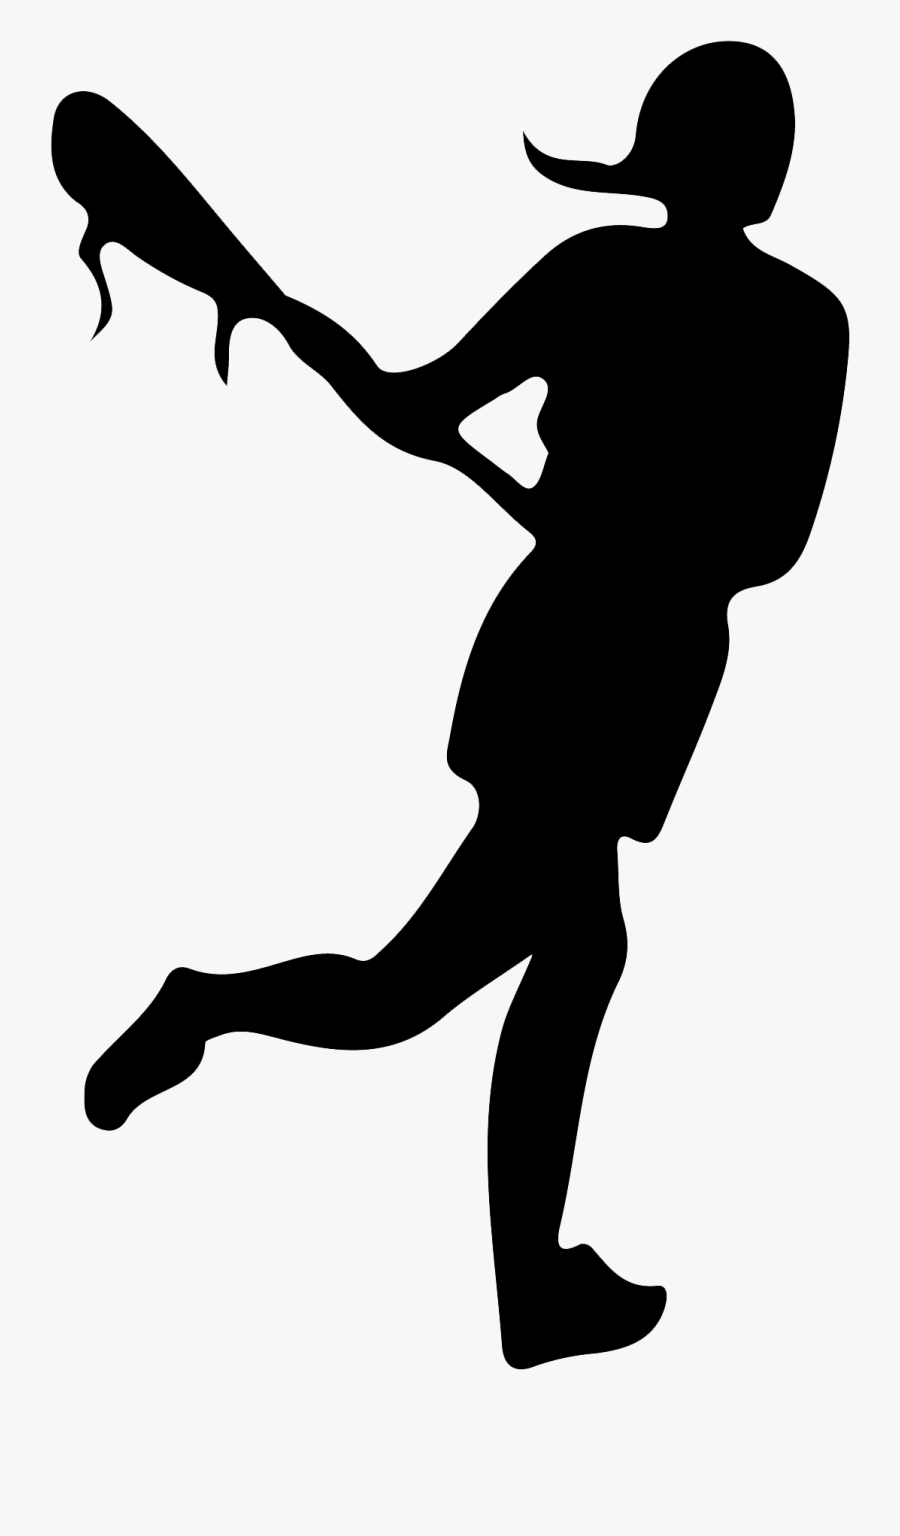 Women"s Lacrosse Sport Lacrosse Sticks Ball - Lacrosse Girl Player Silhouette, Transparent Clipart